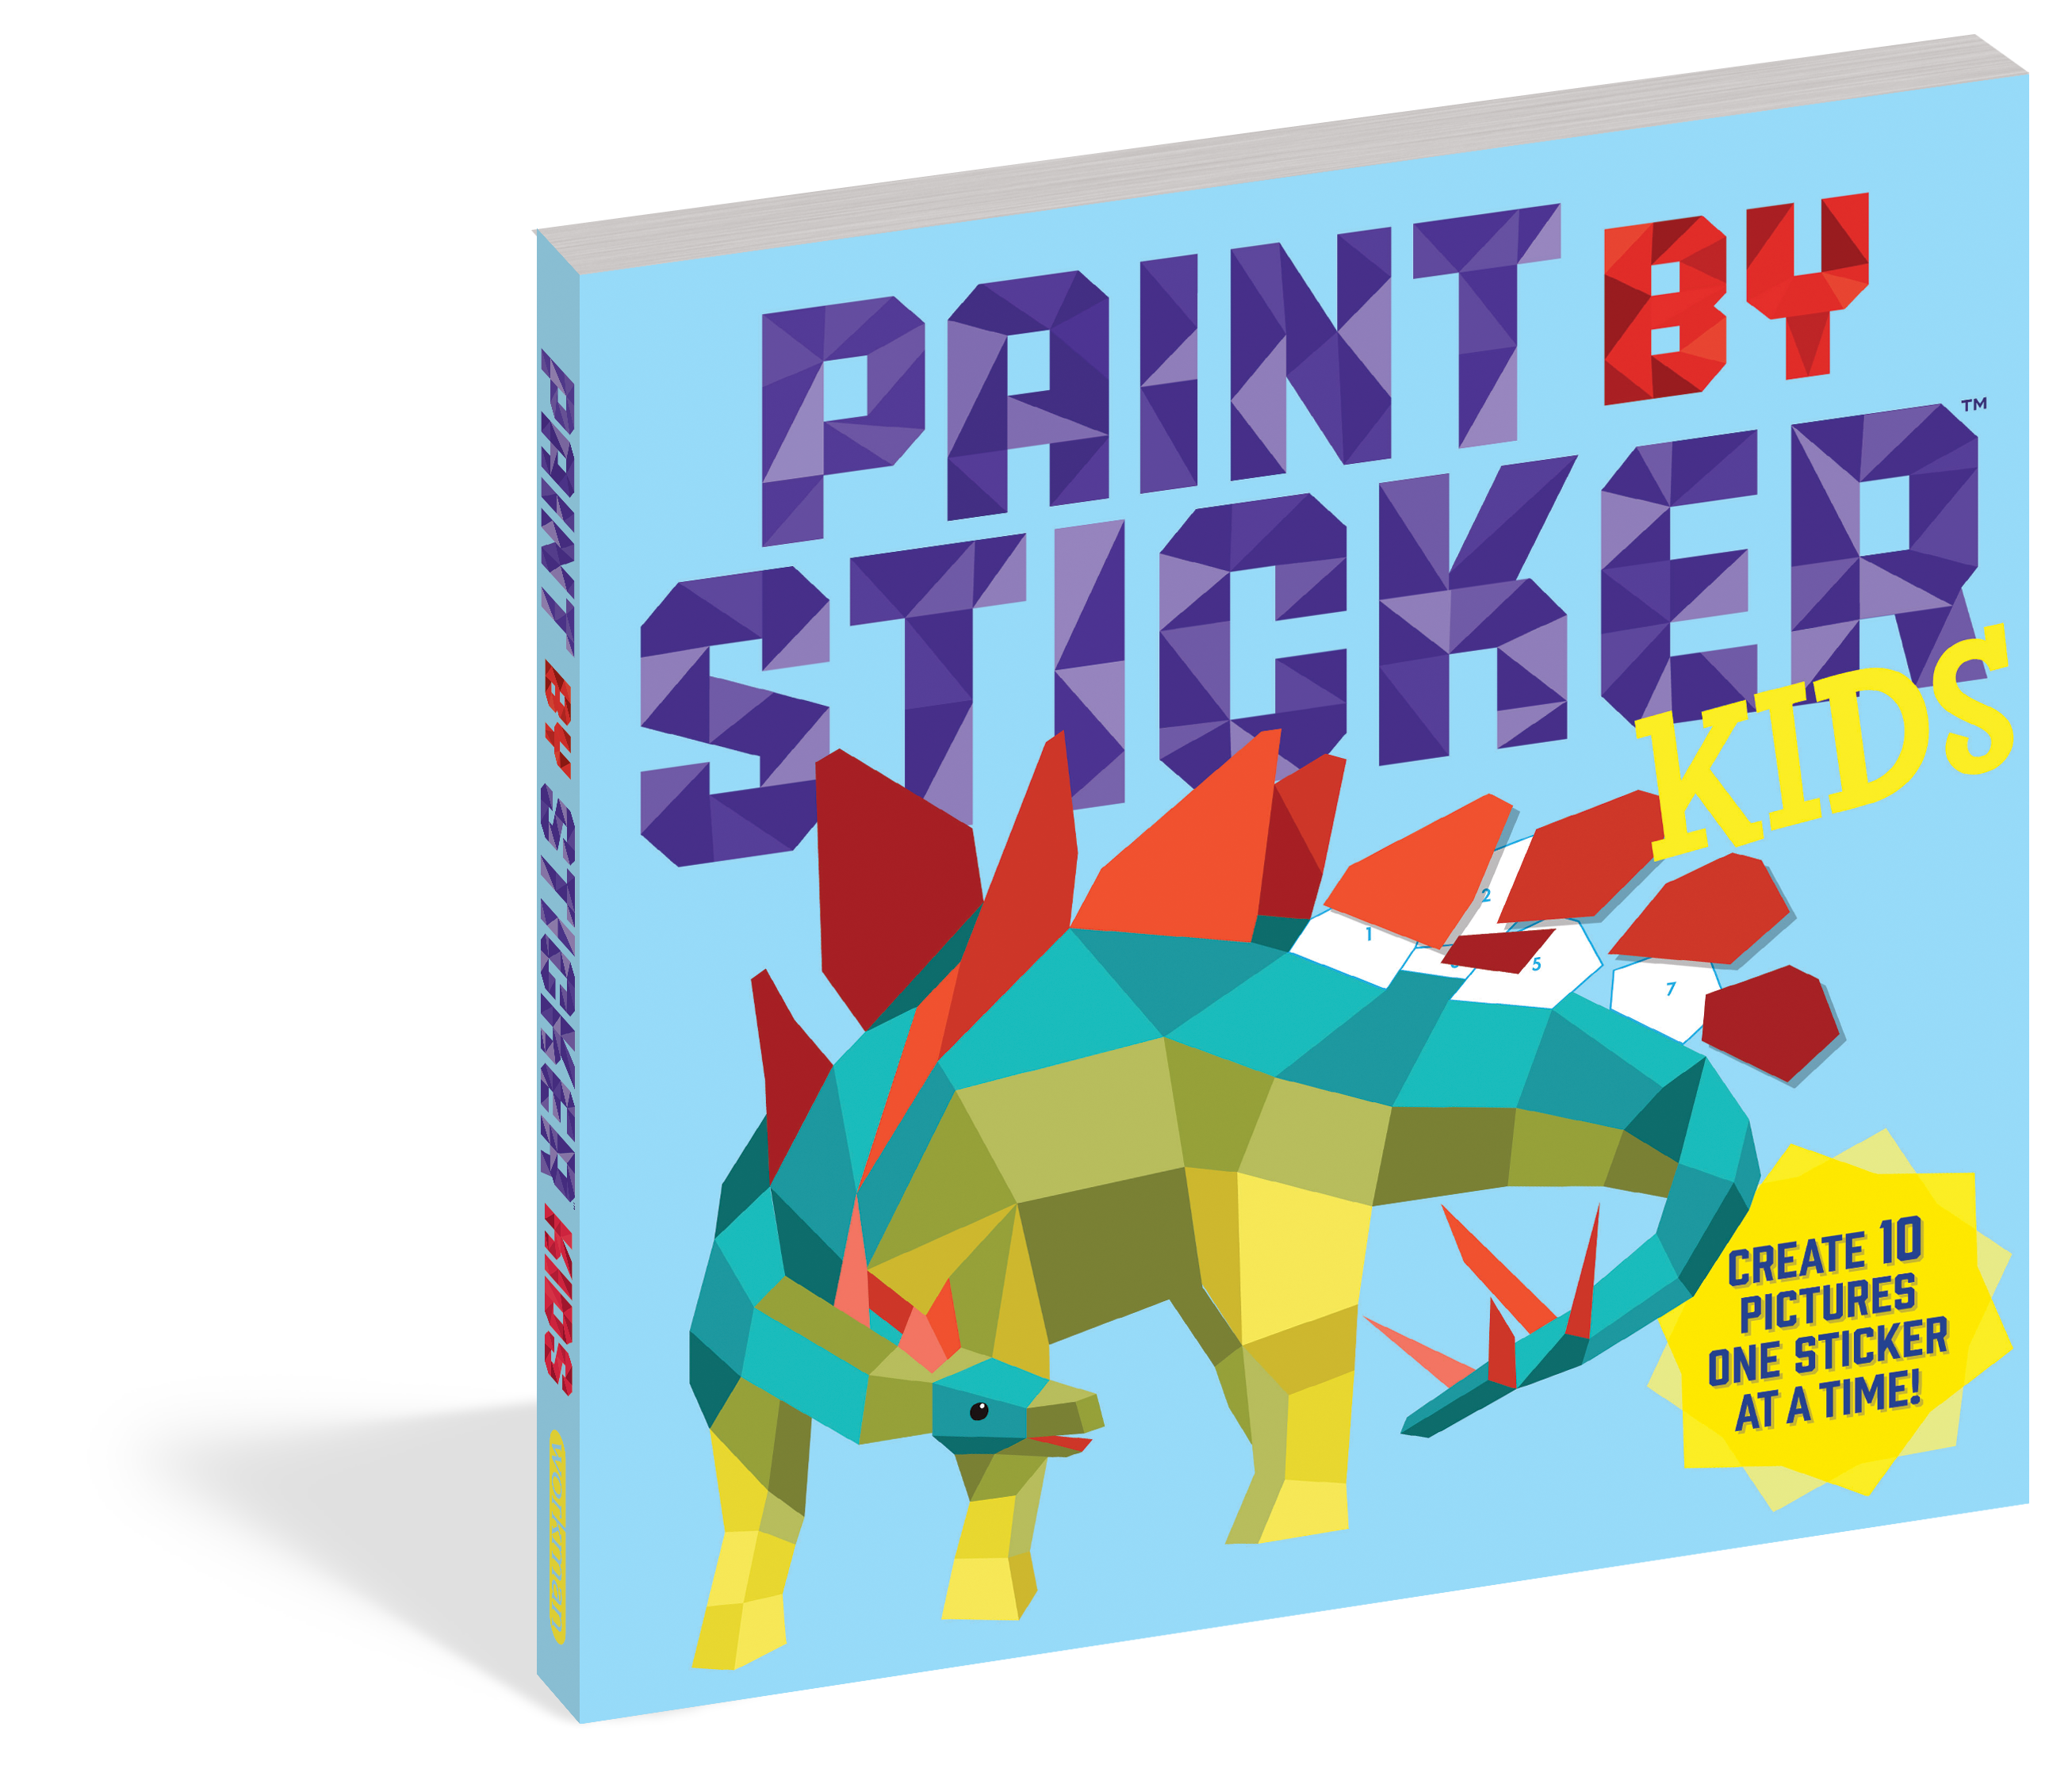 Paint By Sticker Kids - The Original    